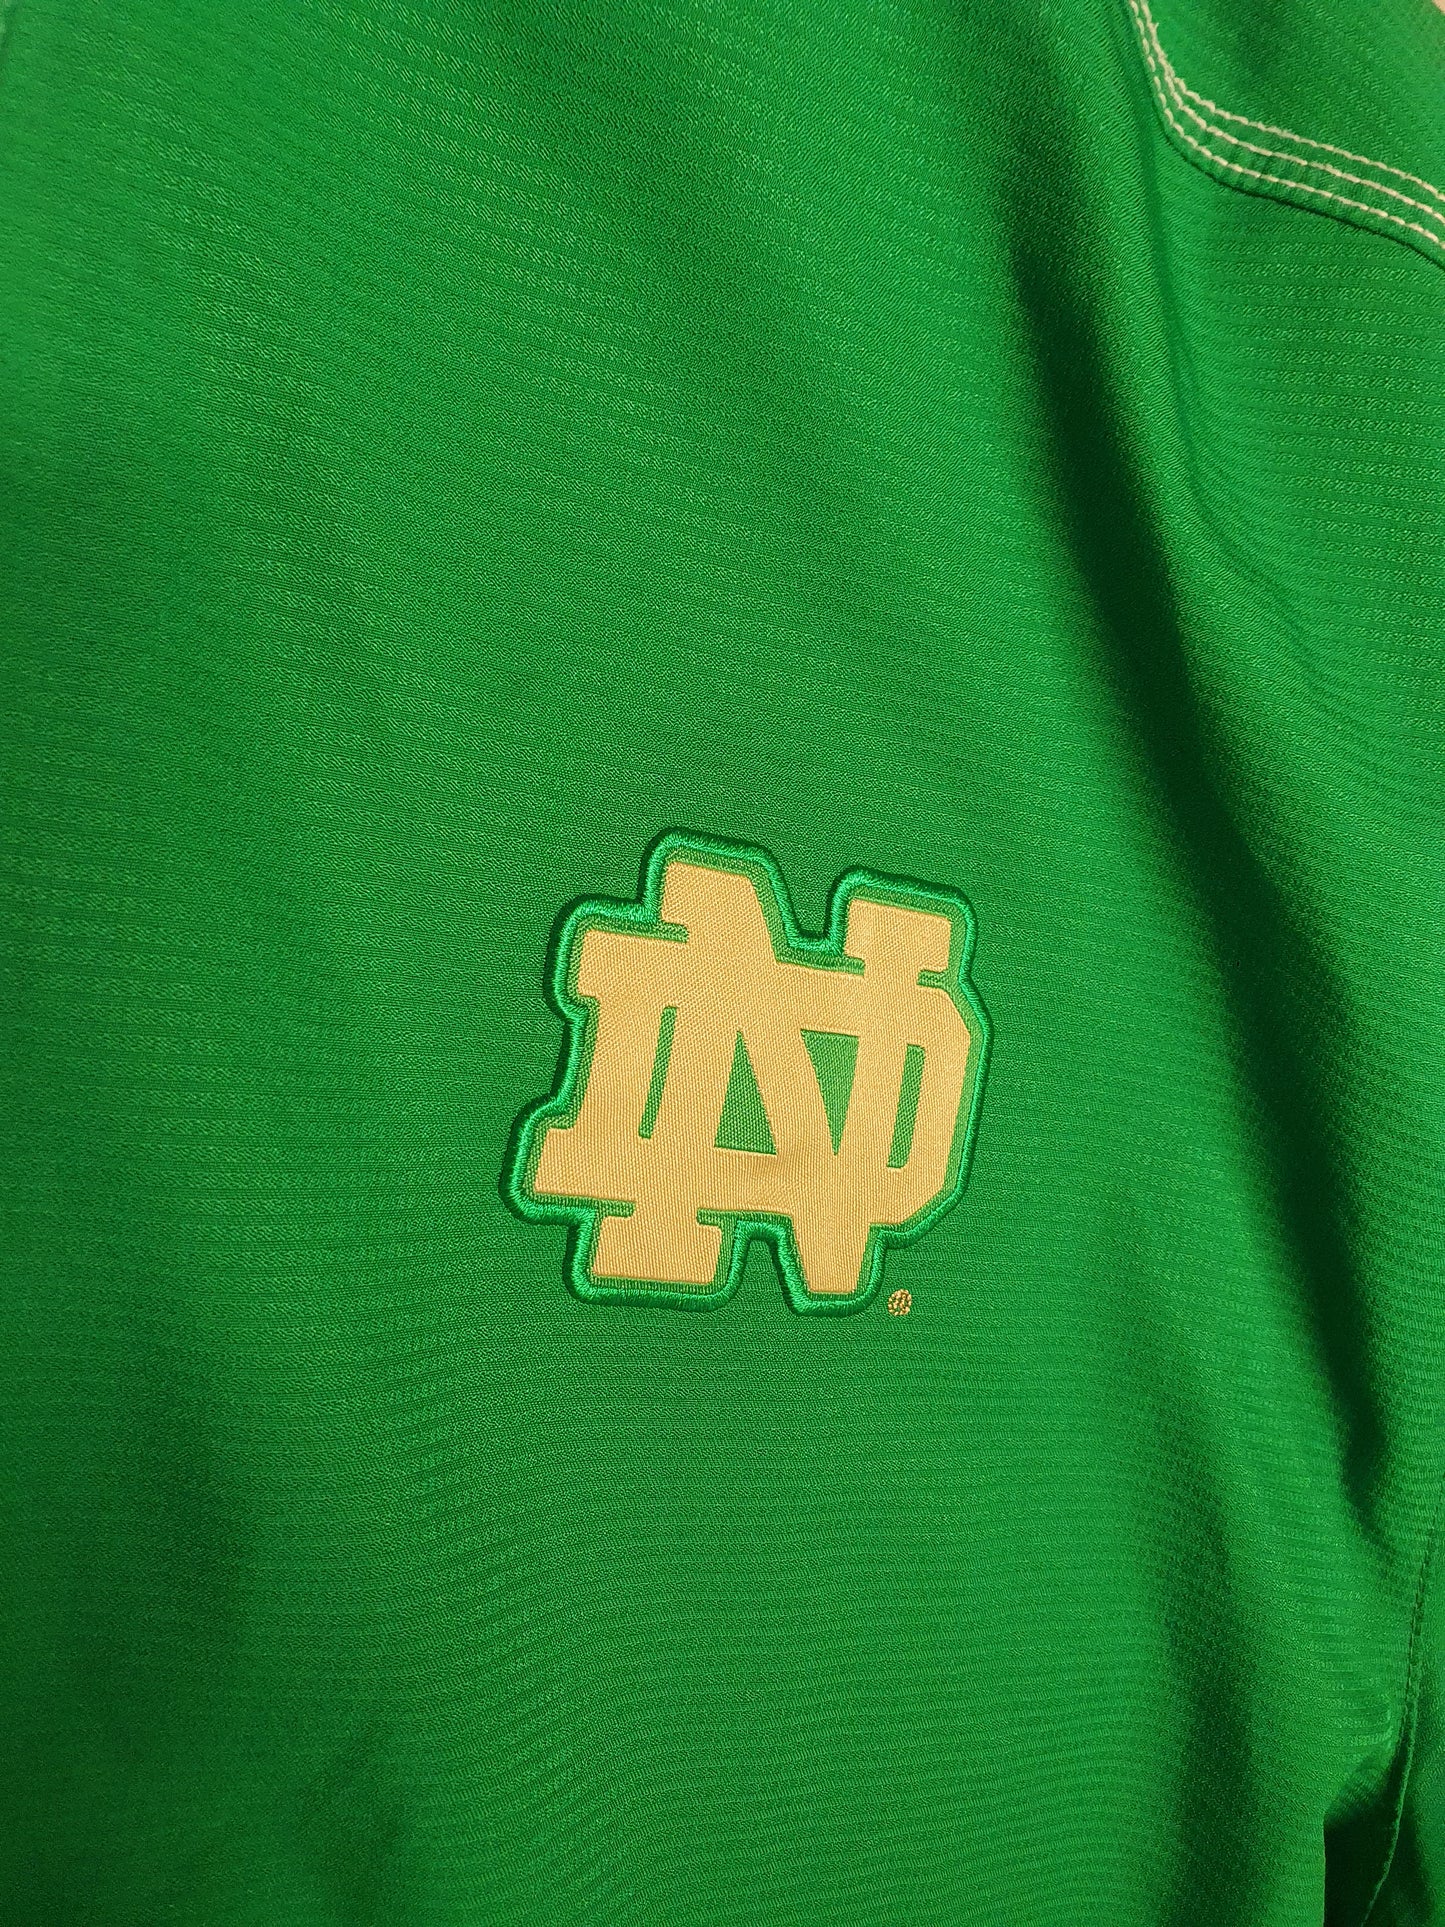 Notre Dame Fighting Irish Jacket Size XL